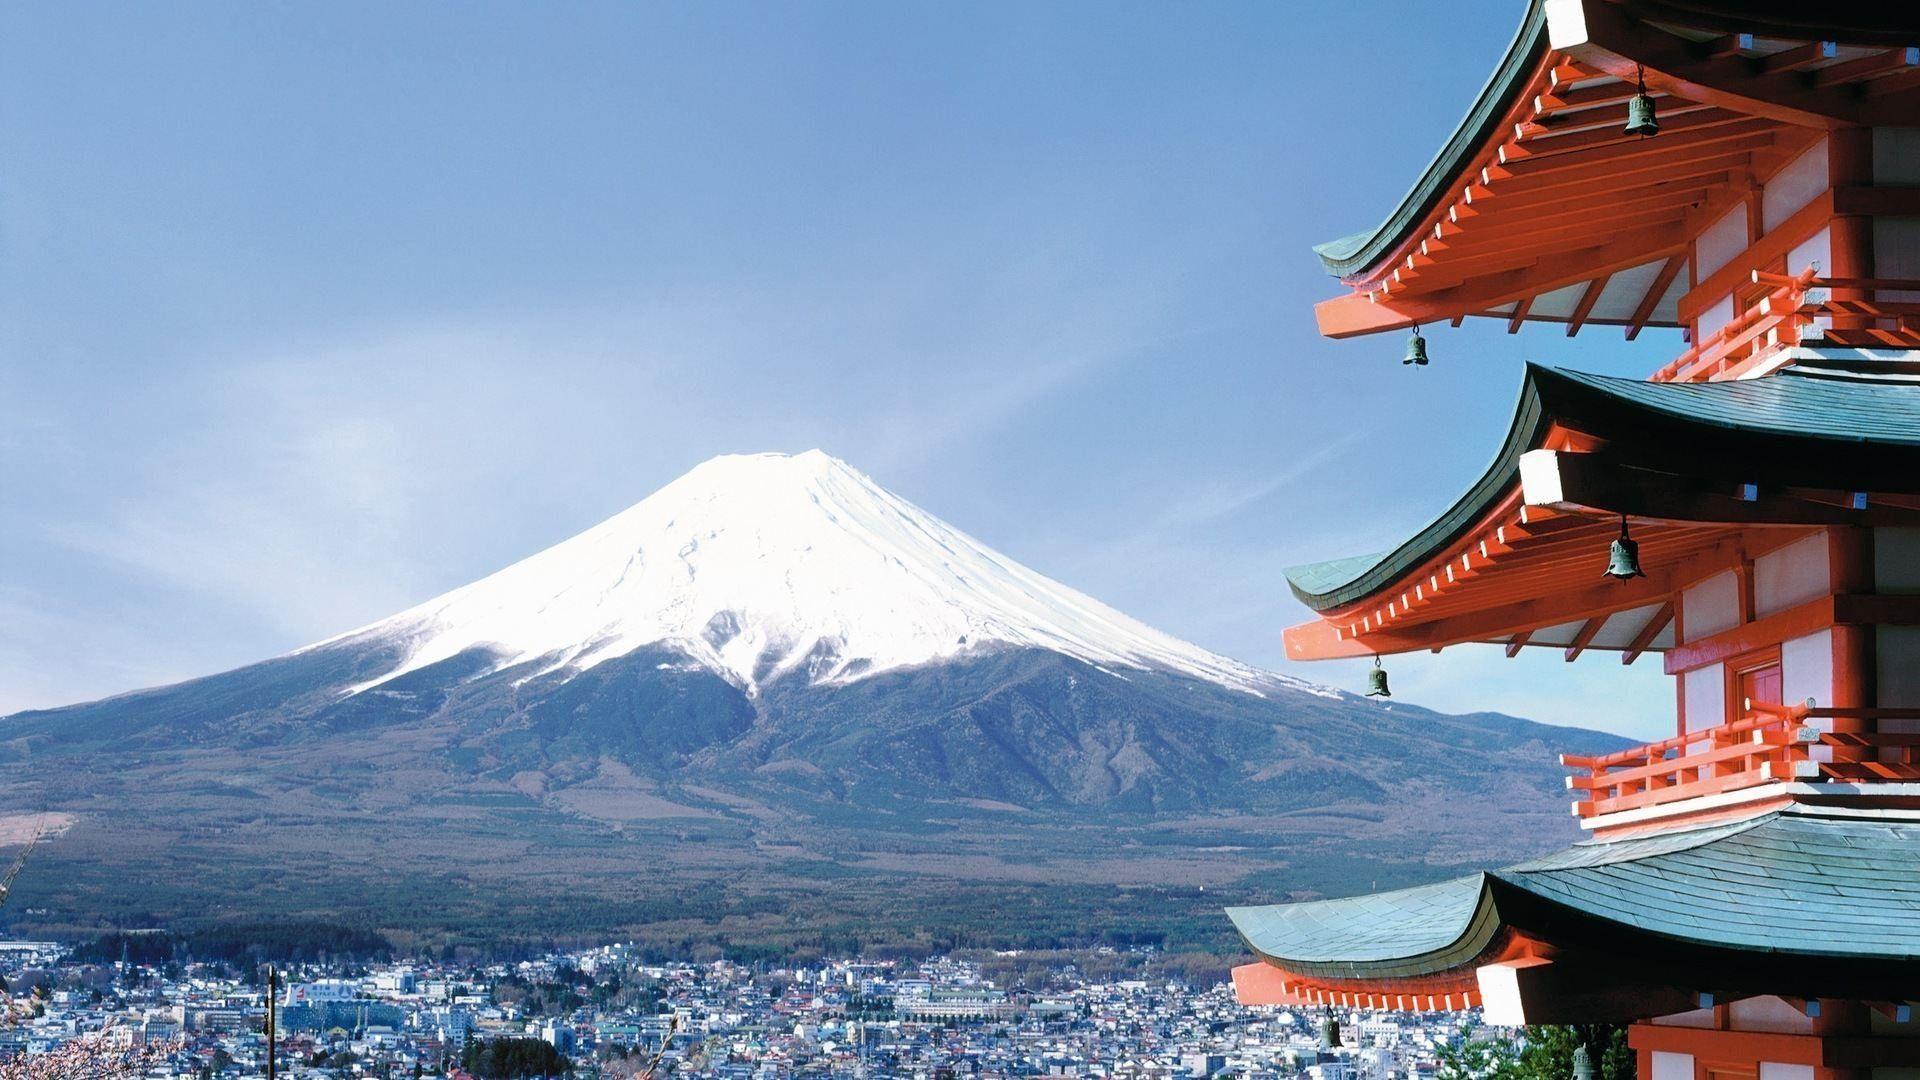 Mount Fuji Landscape Image HD Wallpaper Wallpaper. Risewall